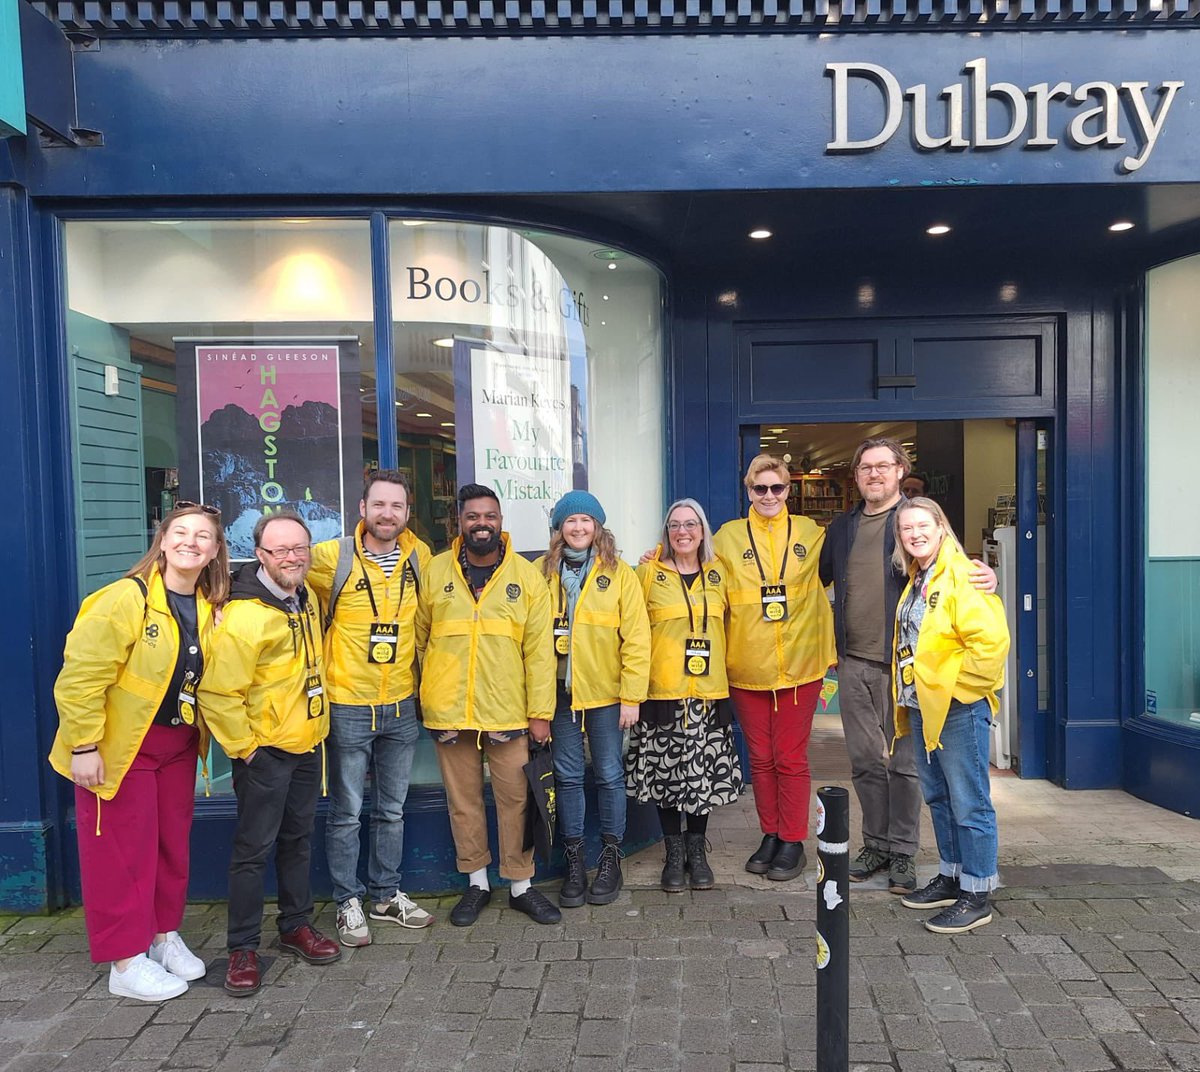 Arrived in Galway, got my yellow jacket and already had an impromptu storytime at @ByrnesBooks! #WholeWildWorld @KidsBooksIrel @LaureatenanOg @OBrienPress